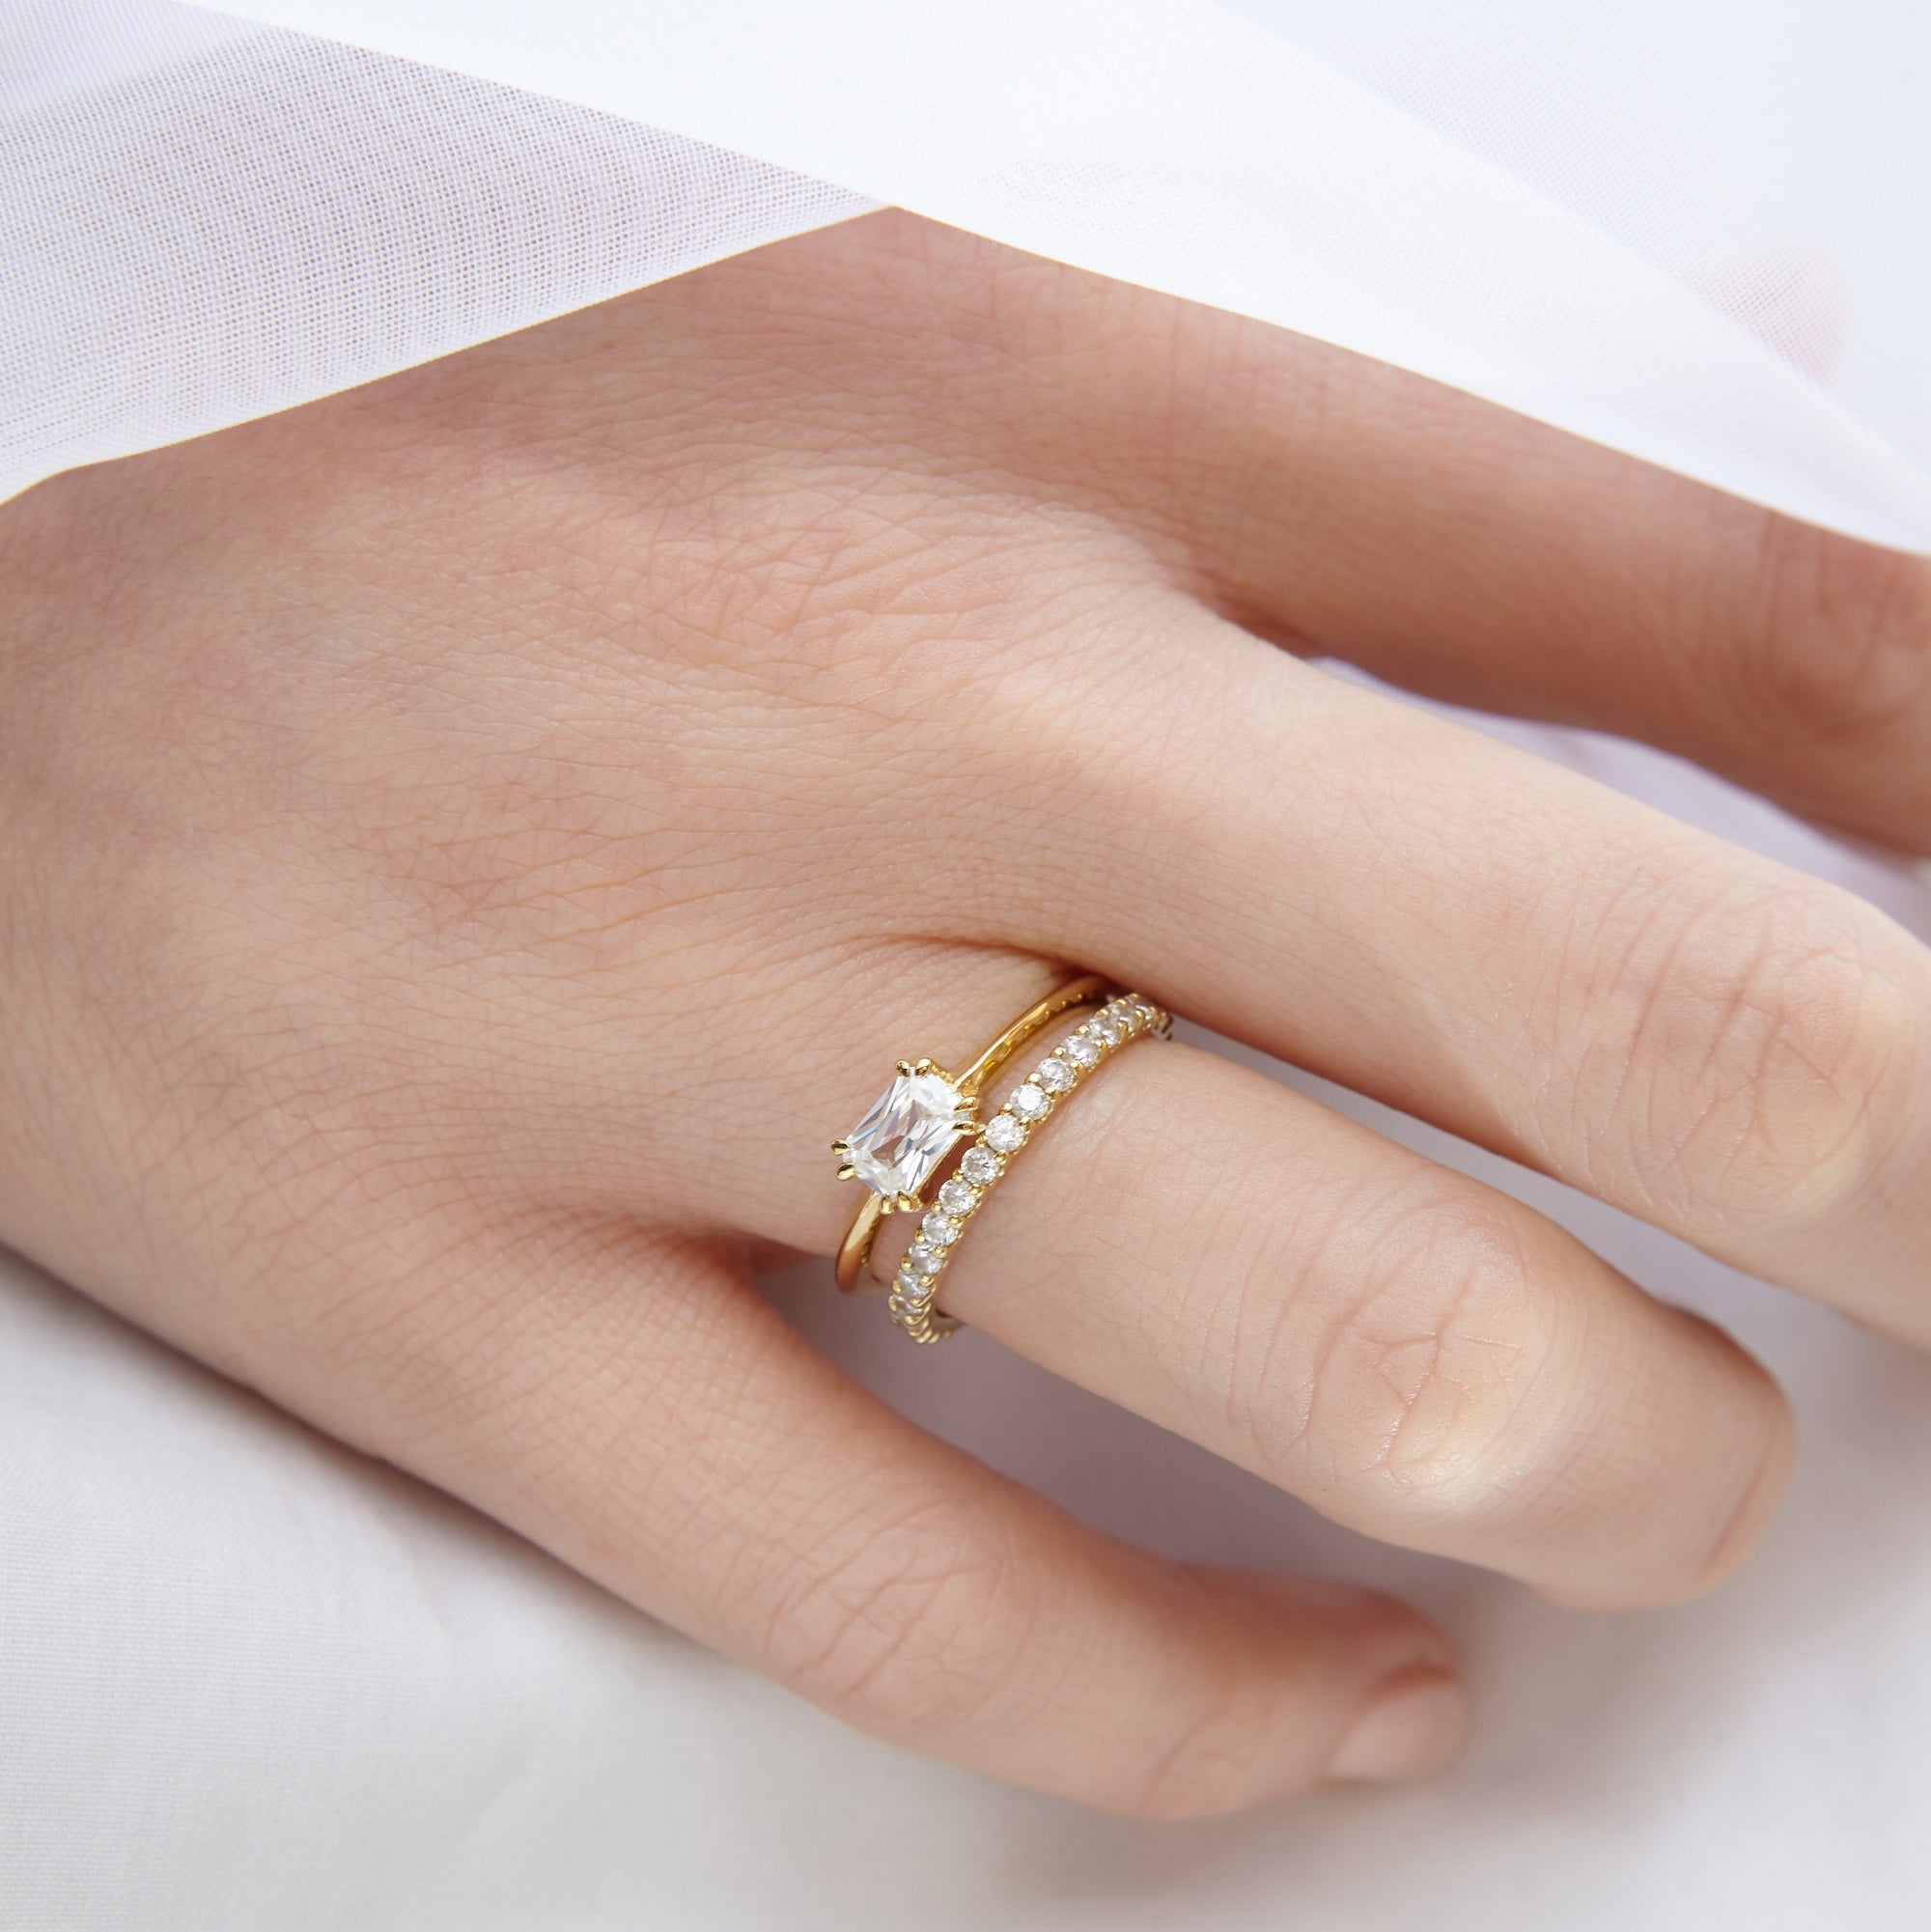 Empress Diamond Solitaire Ring. 18k White Gold or Platinum - MONARC CONCIERGE